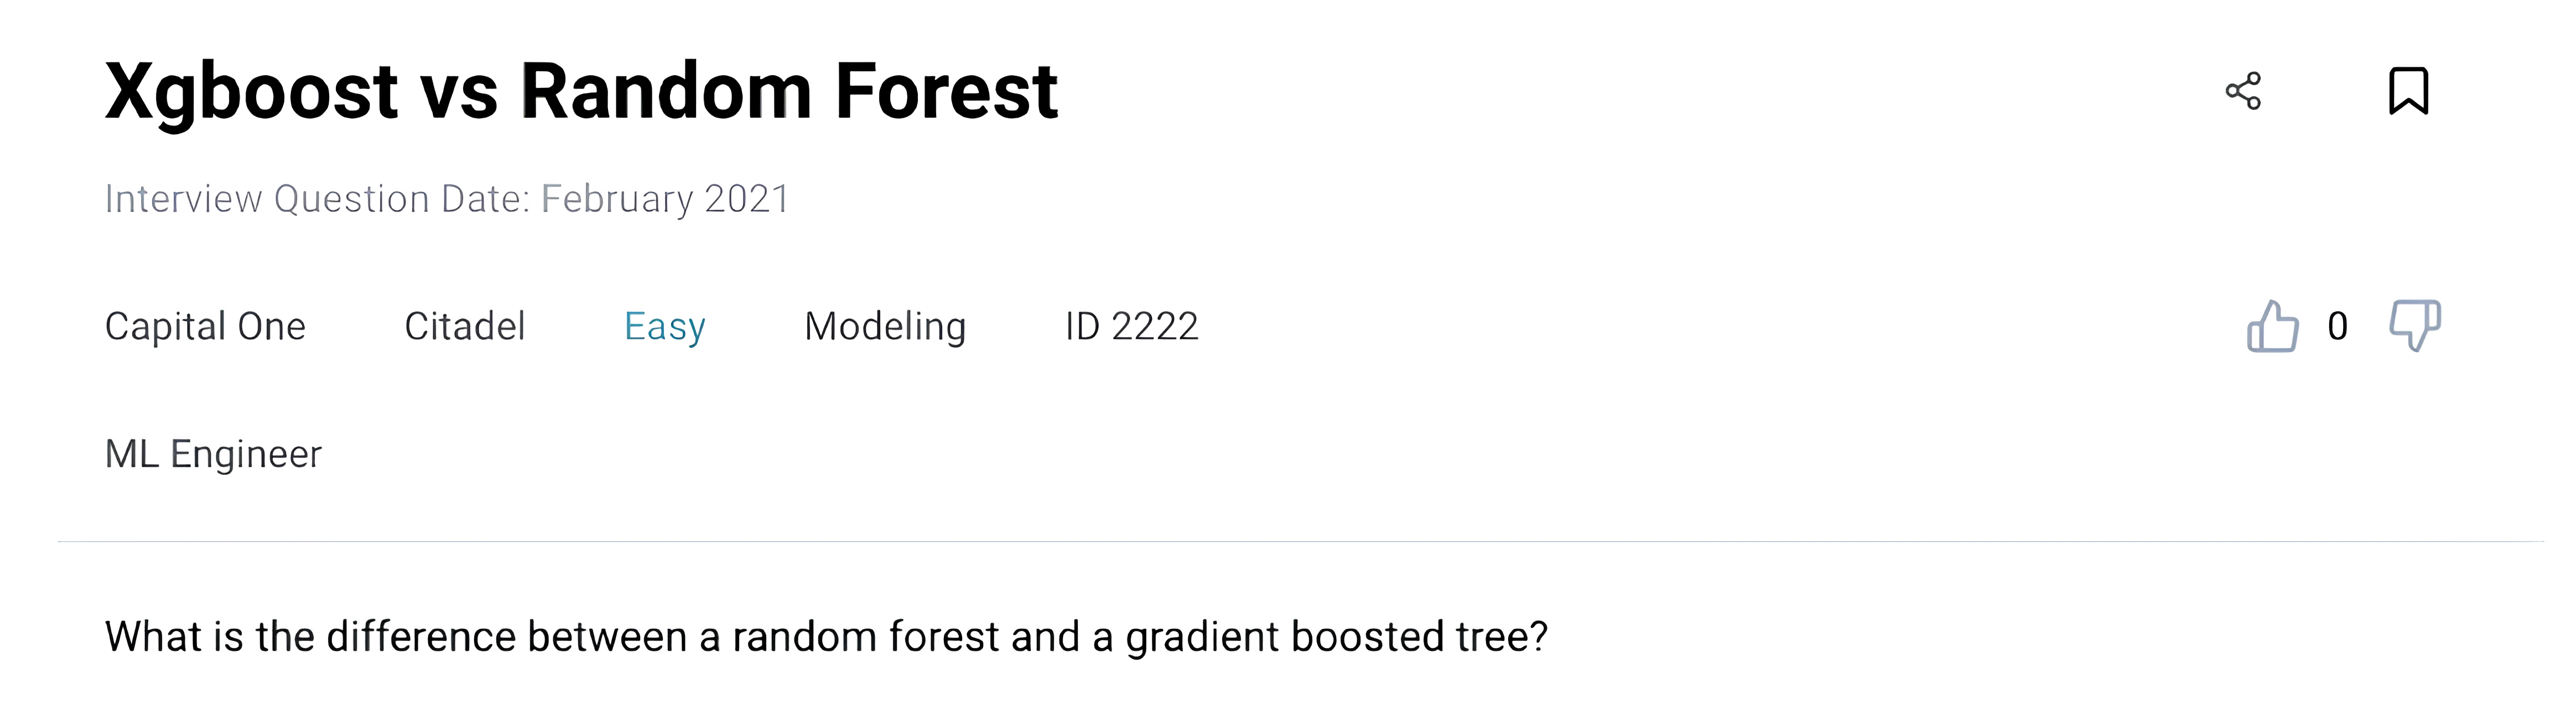 AI interview questions regarding Xgboost & Random Forest